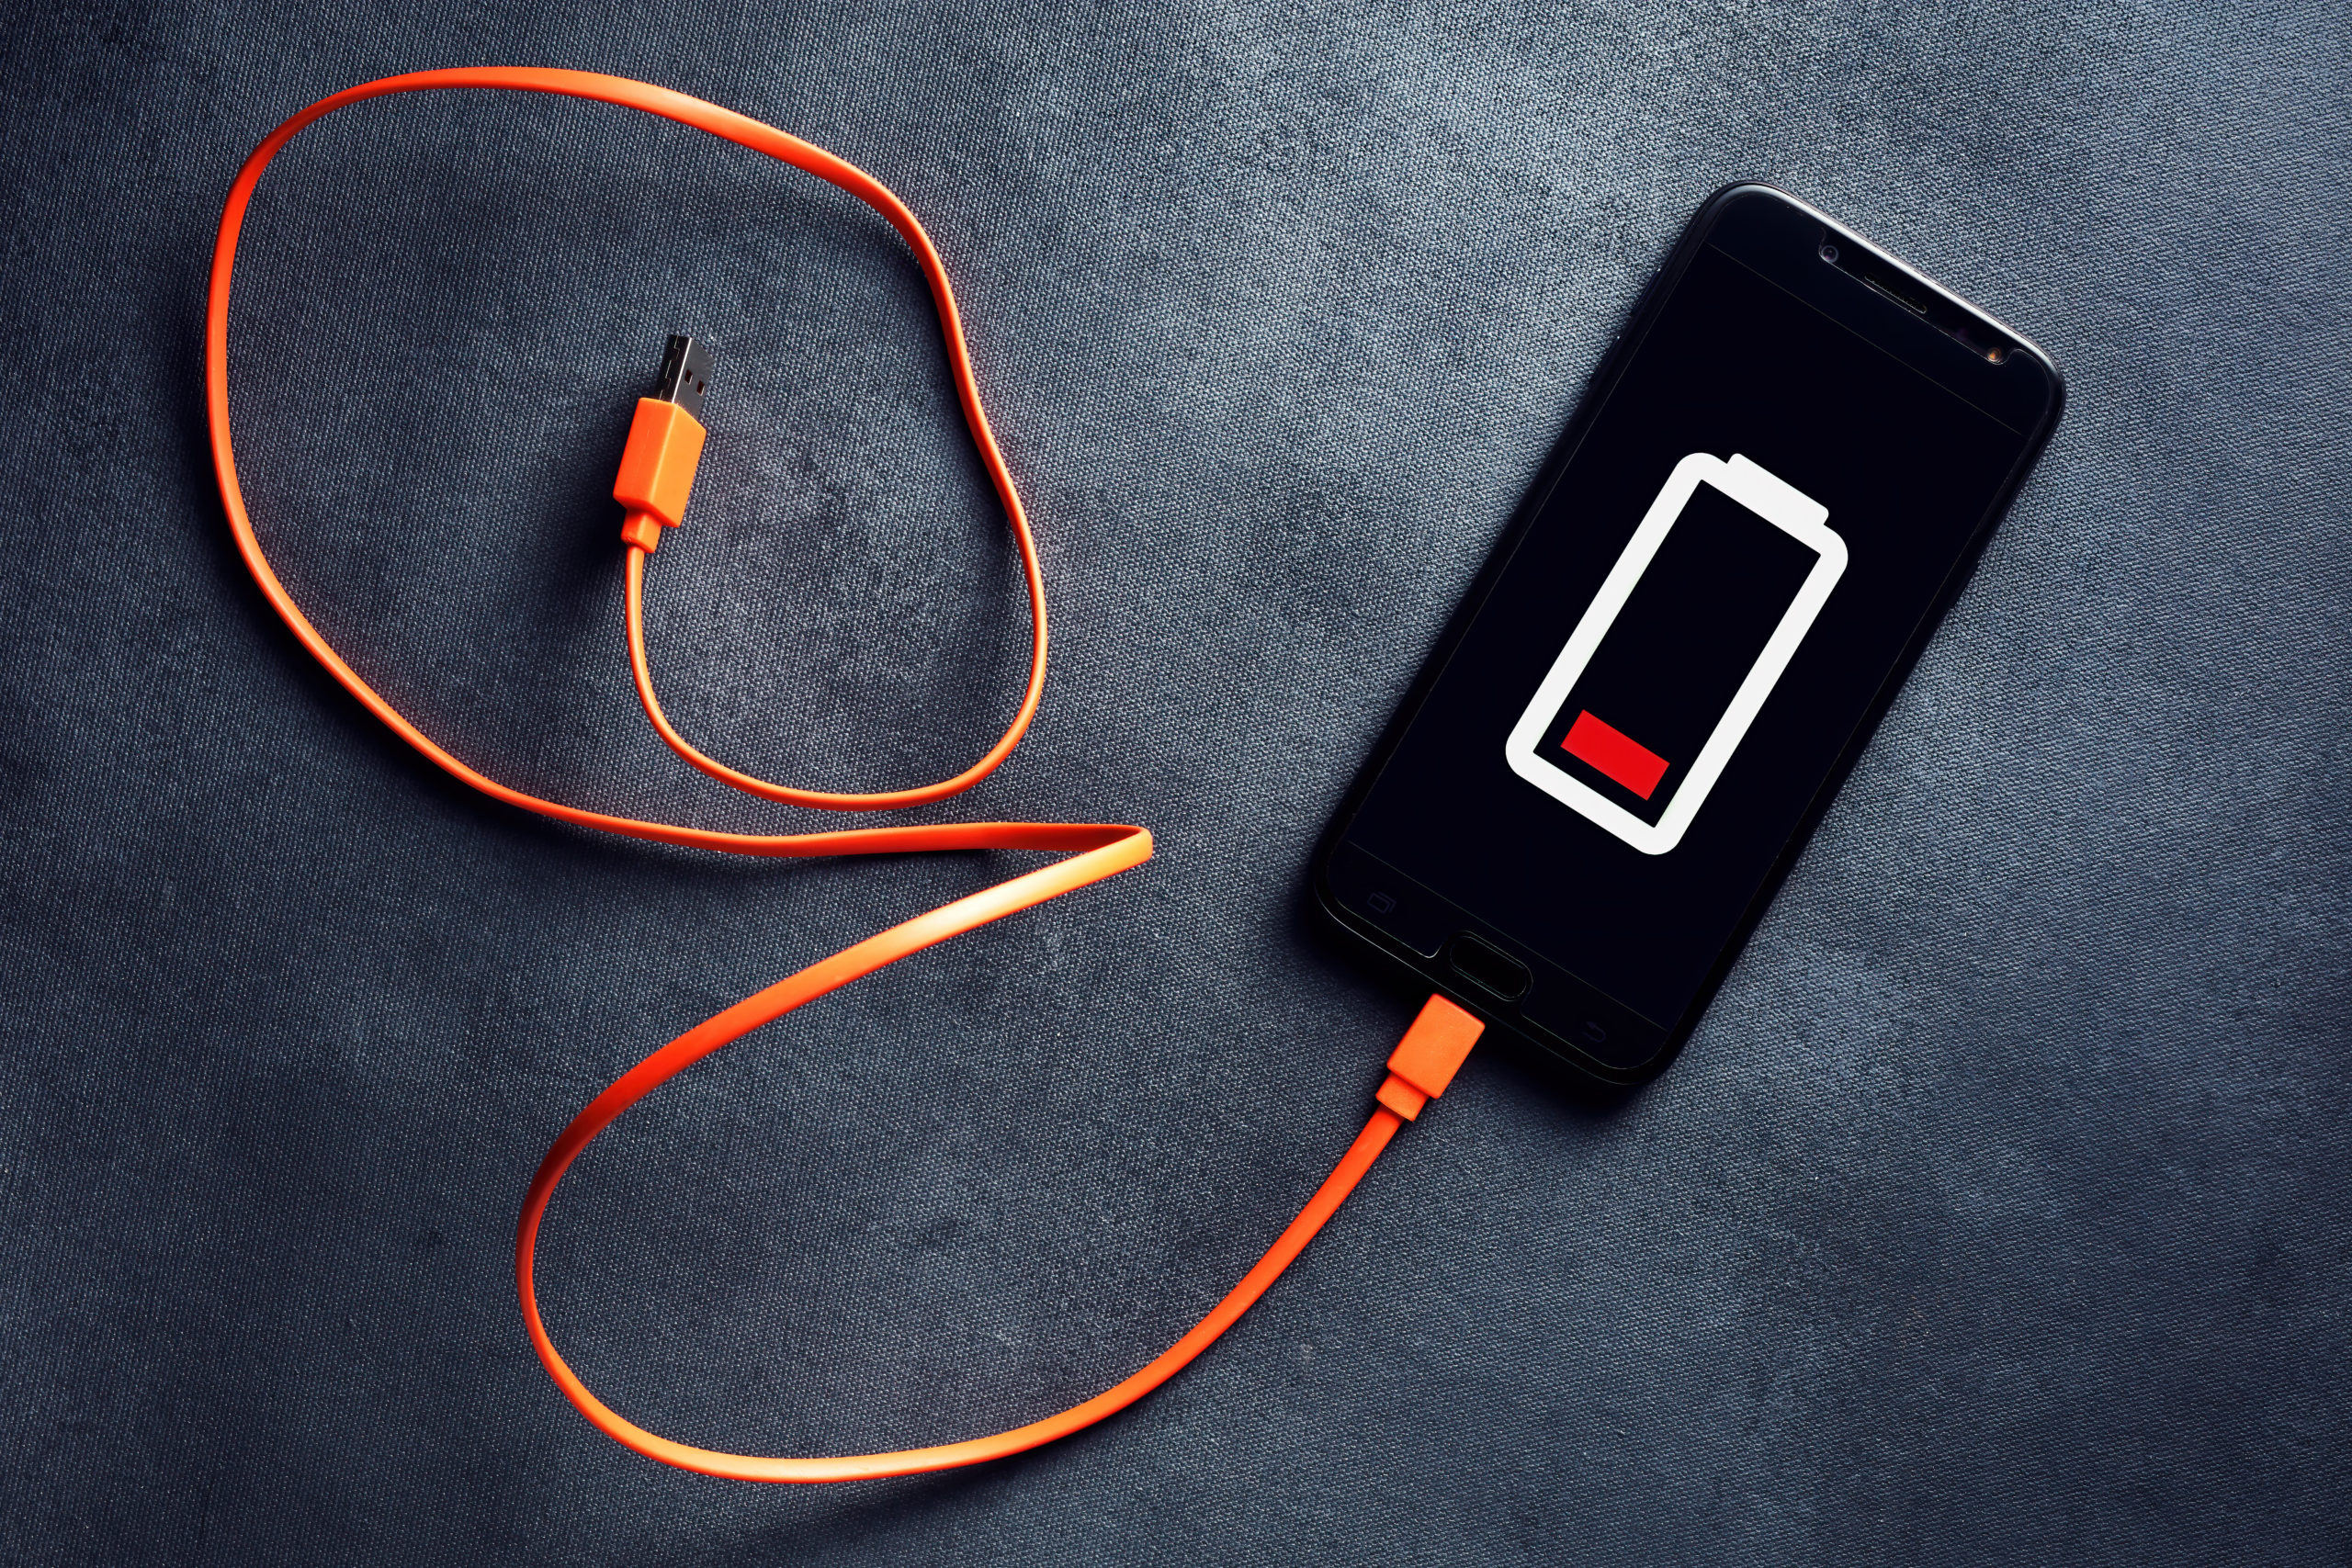 Forgotten apps drain your battery